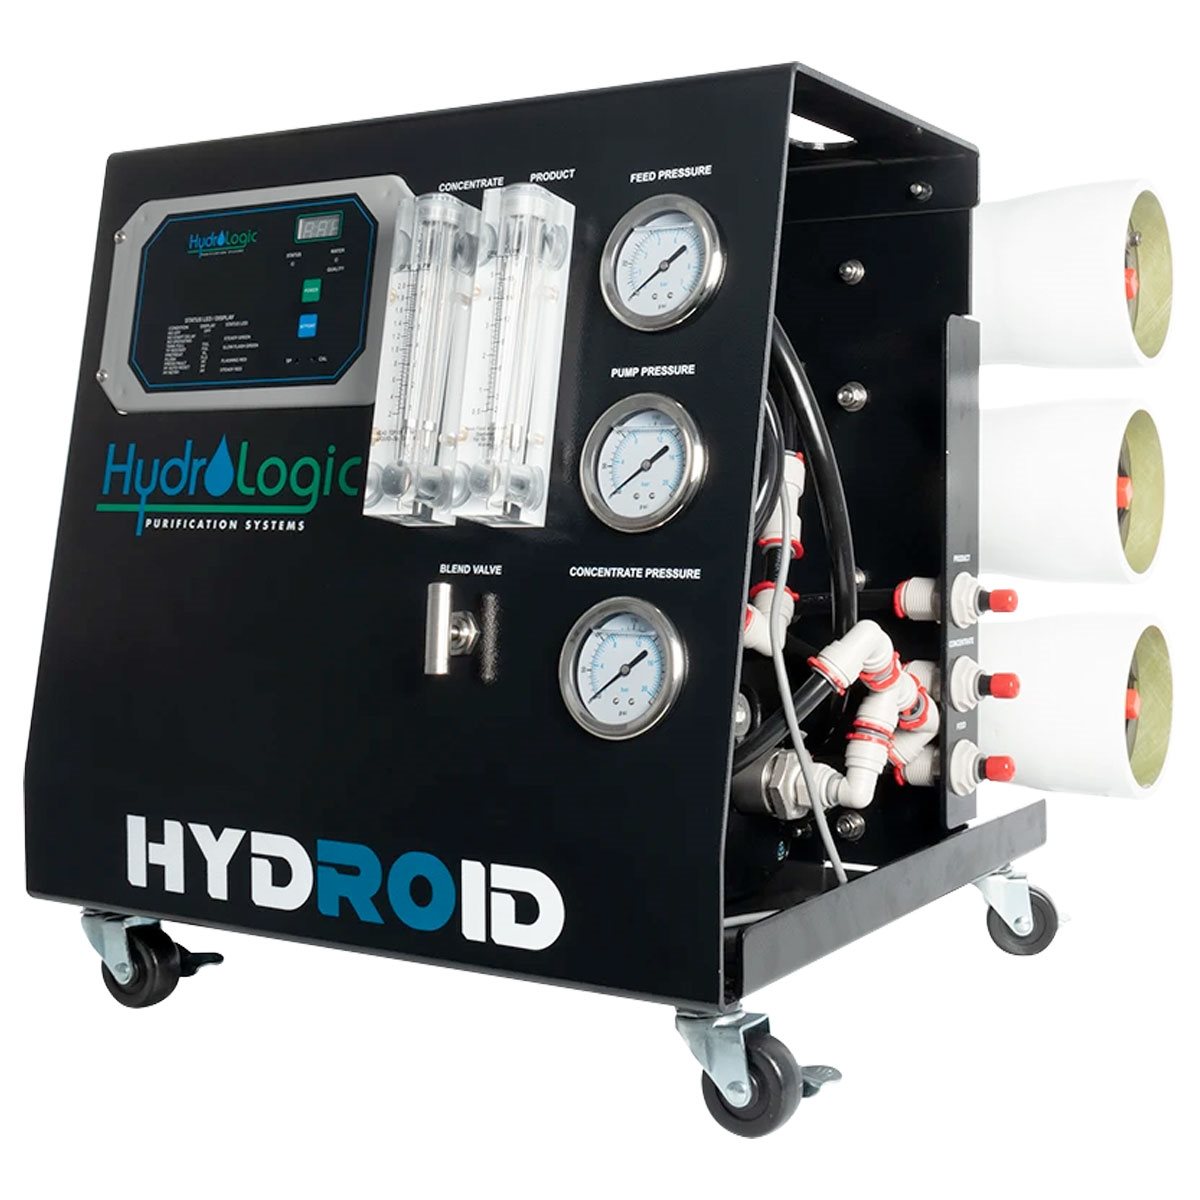 Product Image:Système d'OI commercial compact jusqu'à 5 000 GPD -Hydro-Logic Hydroid